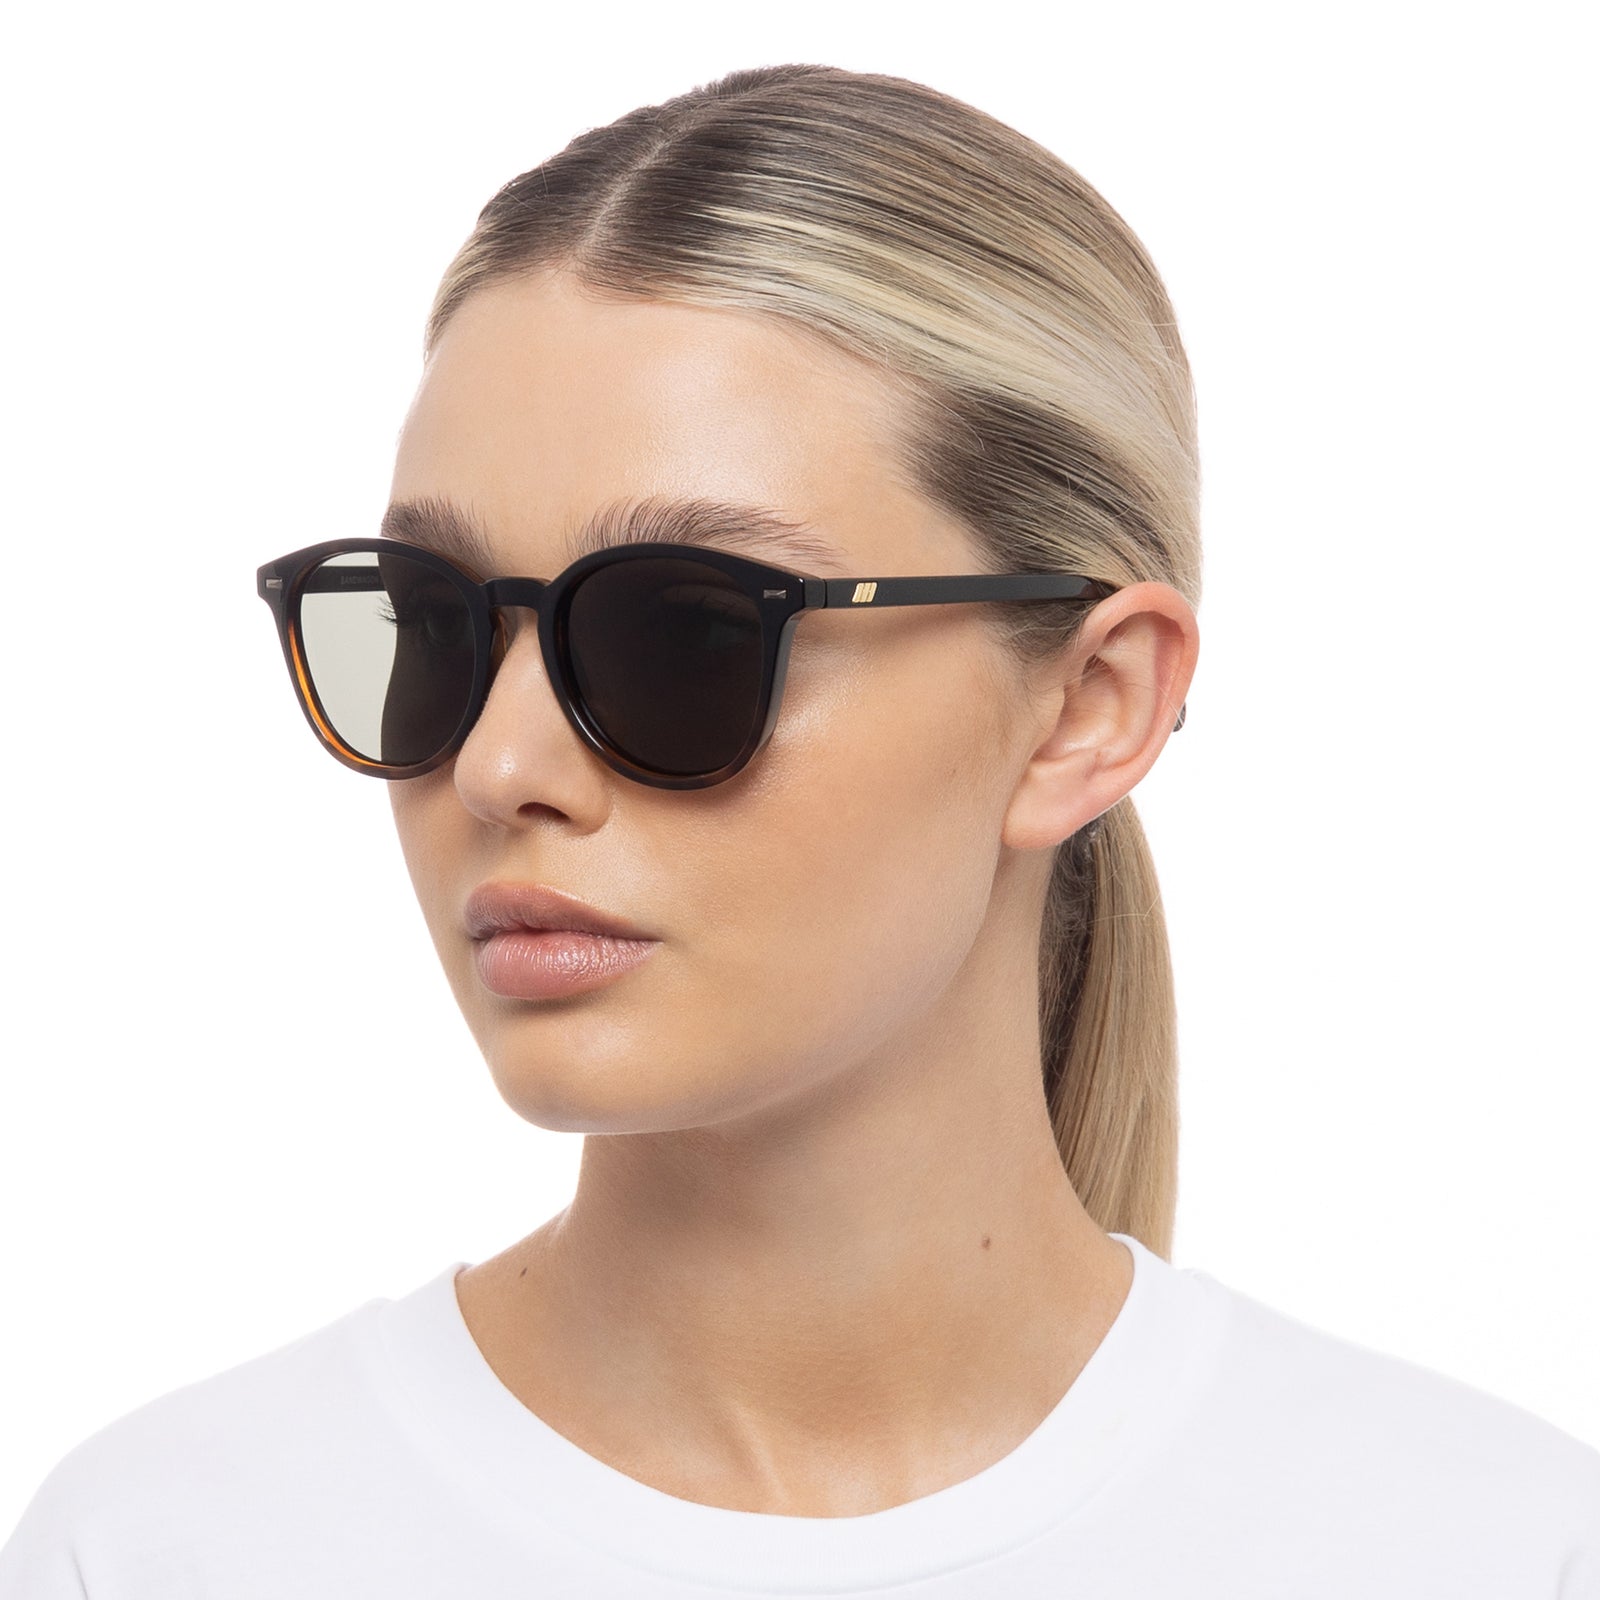 Tort Bandwagon Le Uni-Sex | Specs Black Sunglasses Round